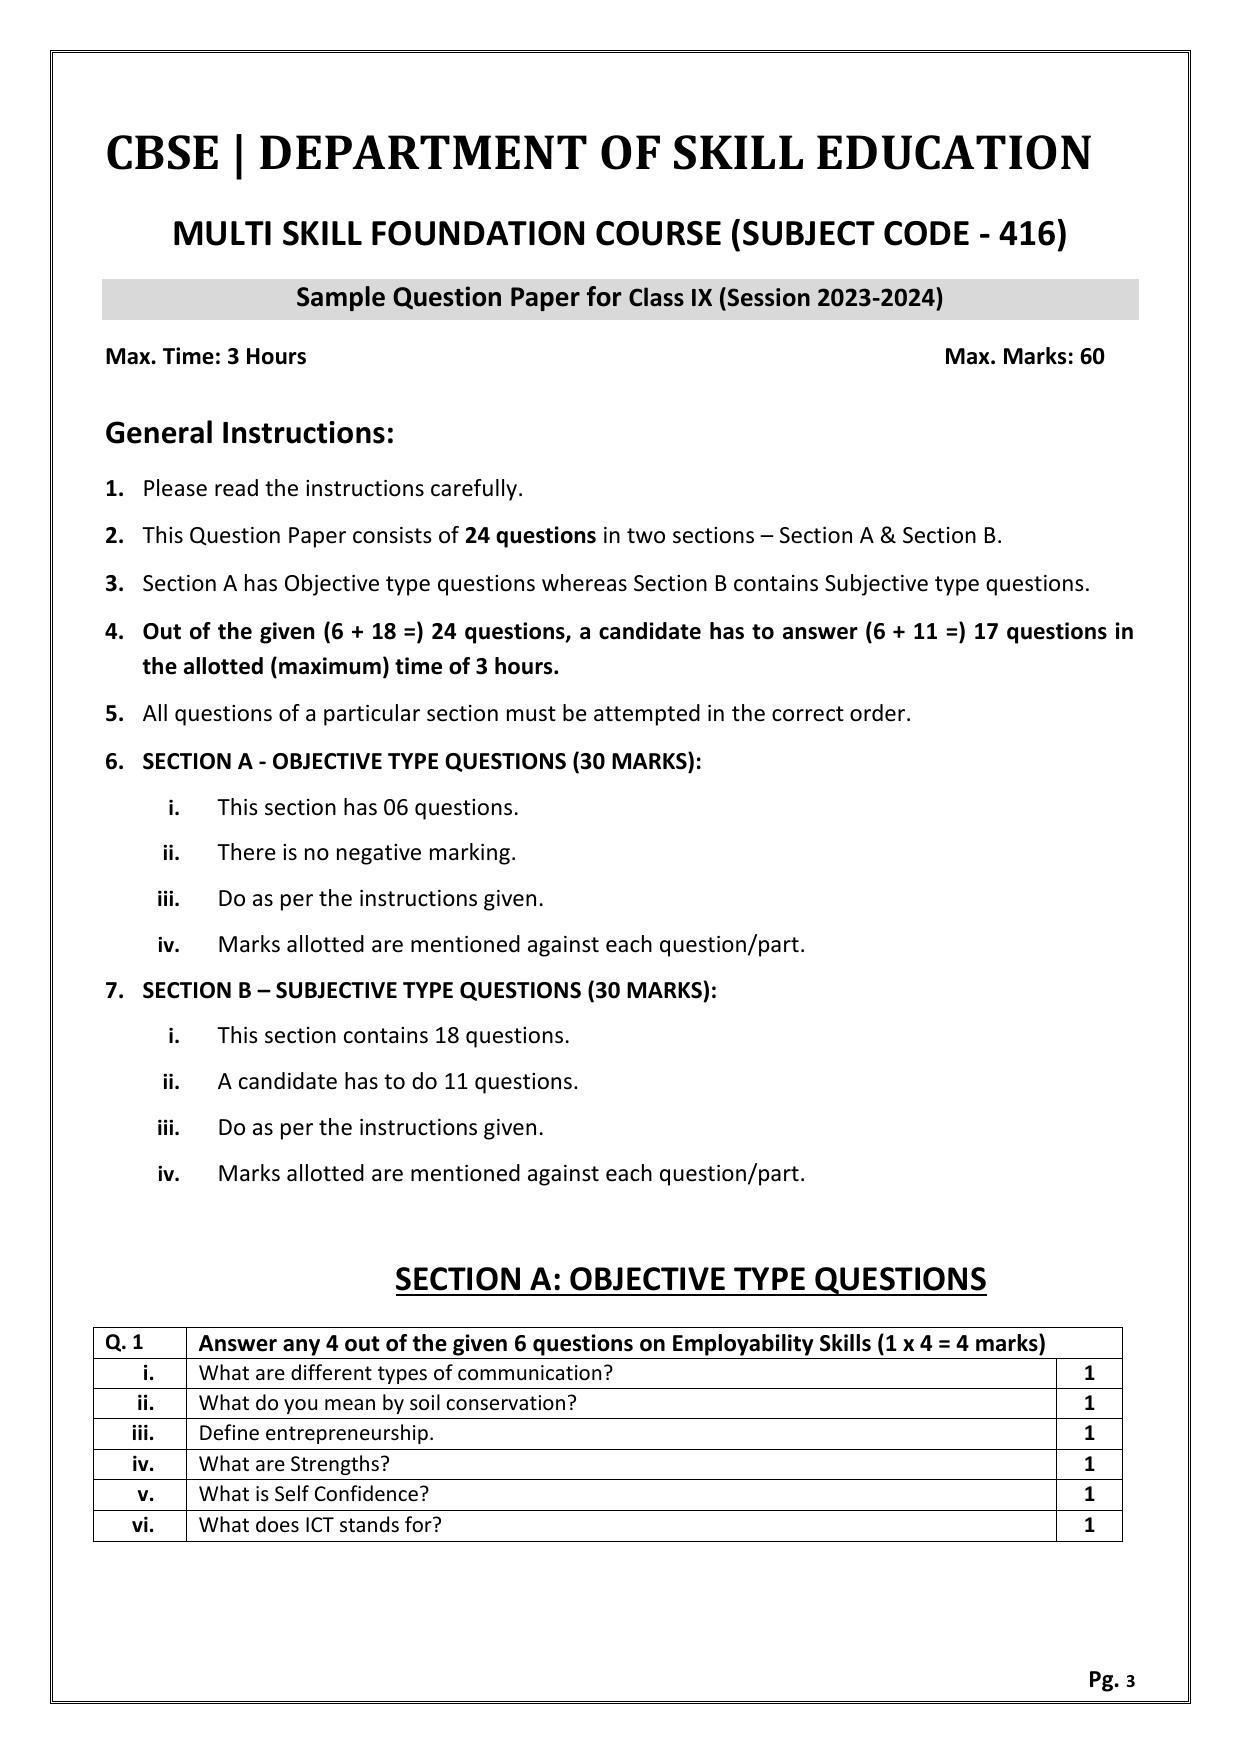 CBSE Class 9 Multi Skill Foundation Course Skill Education-Sample Paper 2024 - Page 3